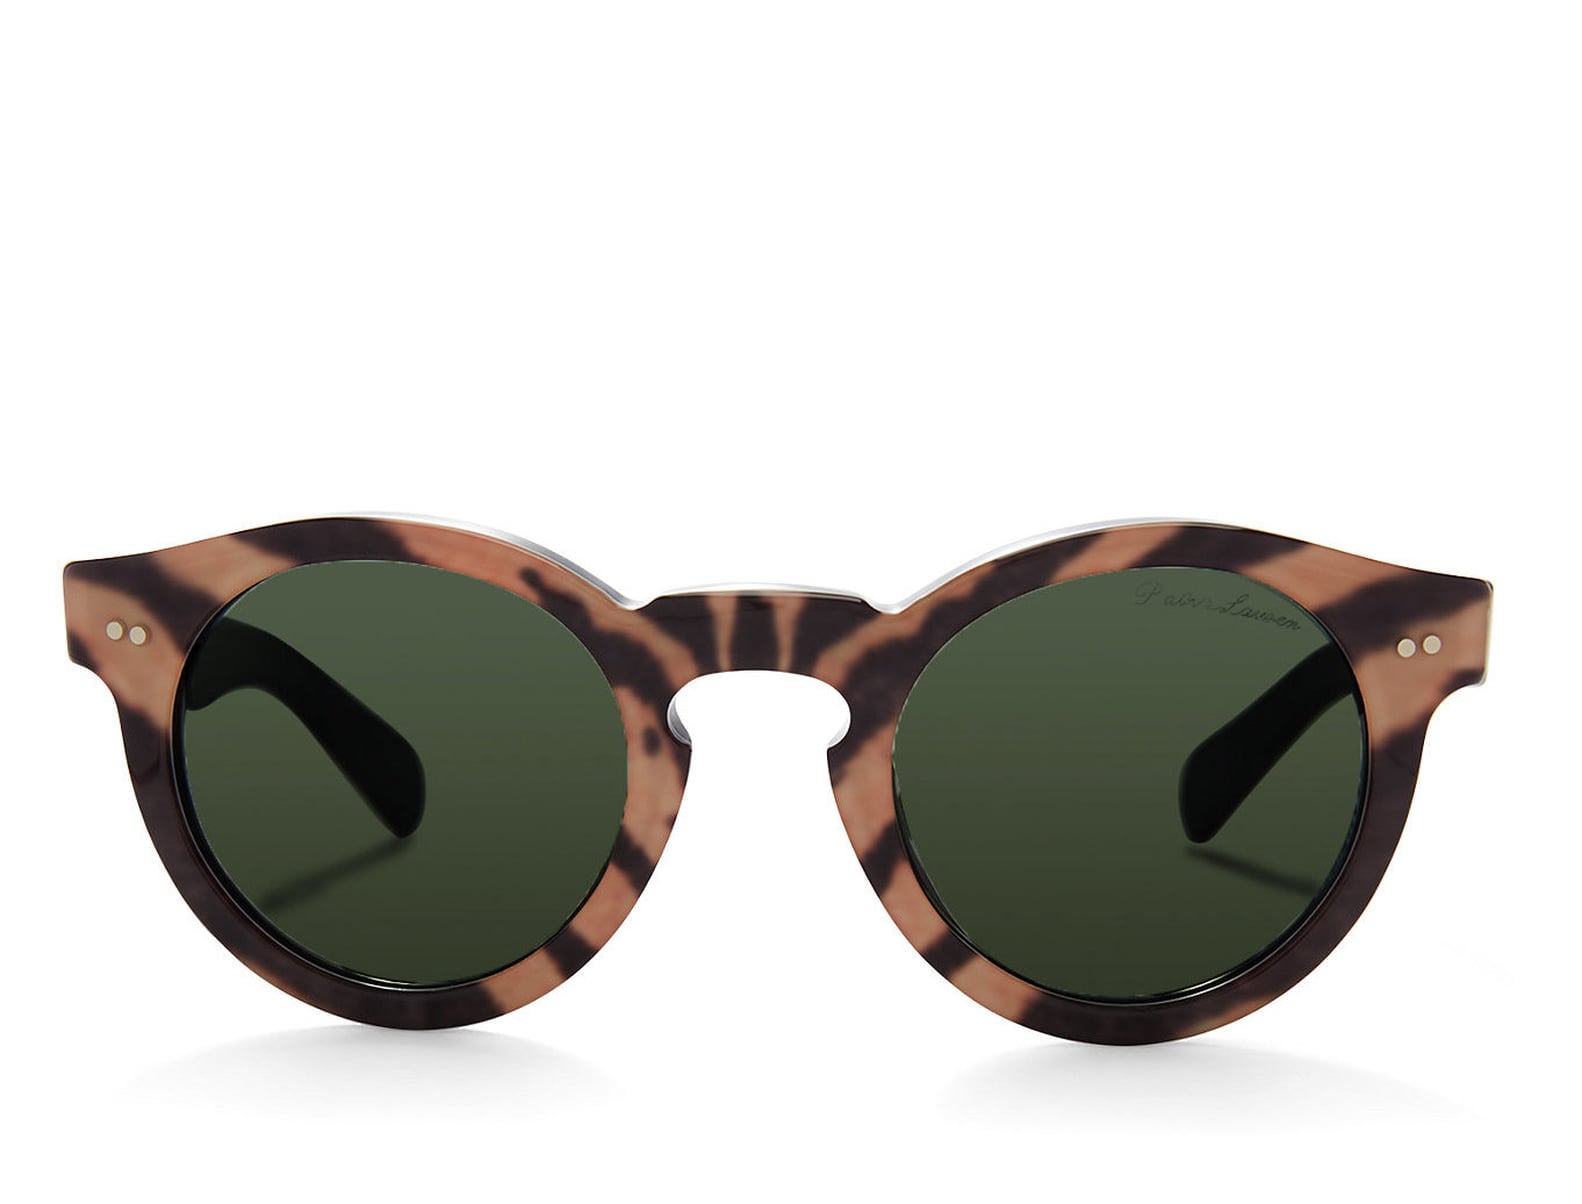 Vintage-Inspired Sunglasses | POPSUGAR Fashion